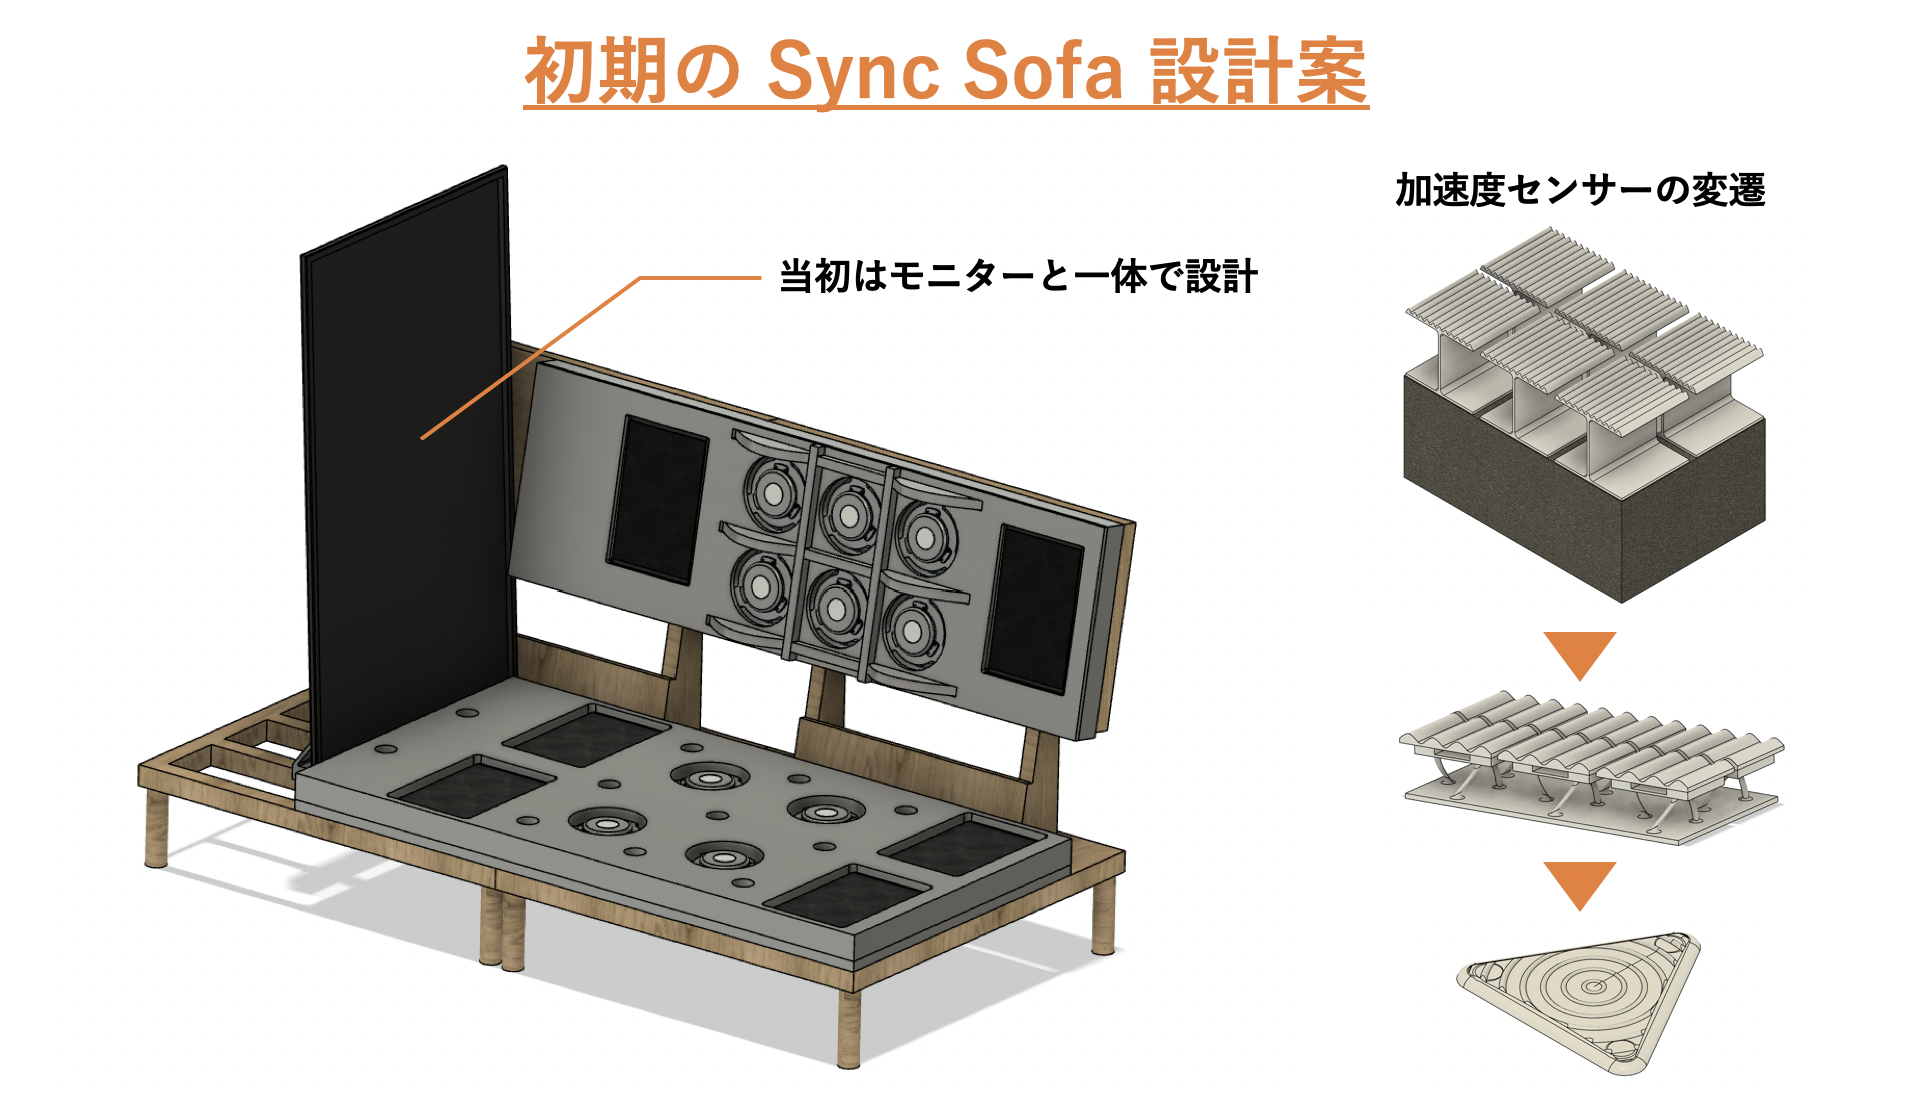 KDDI総合研究所のSync Sofaの当初開発案